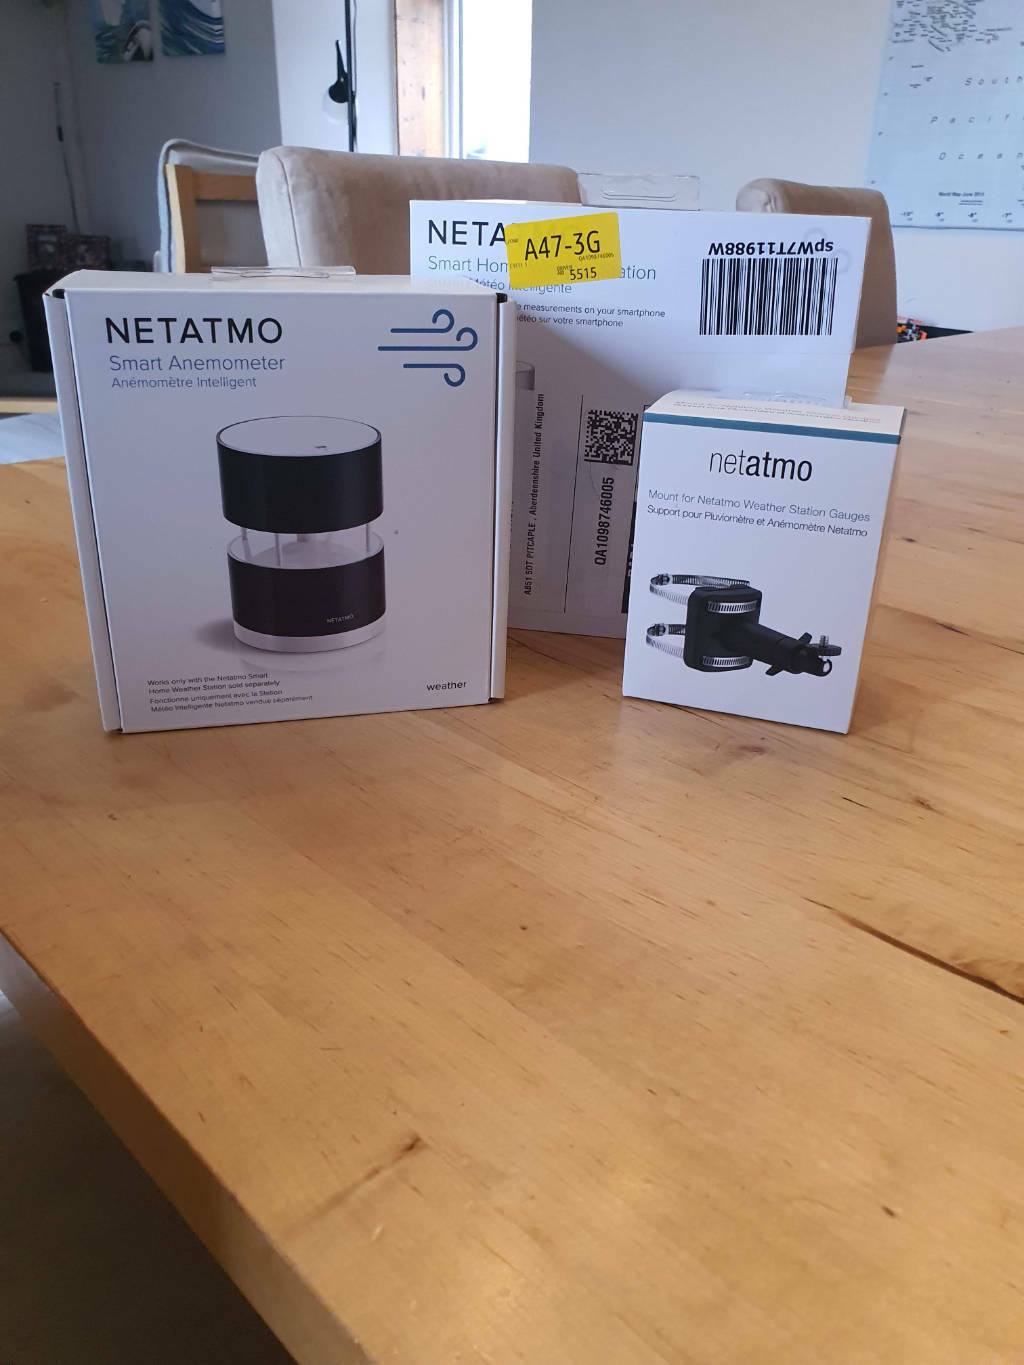 Photo of the Netatmo boxes